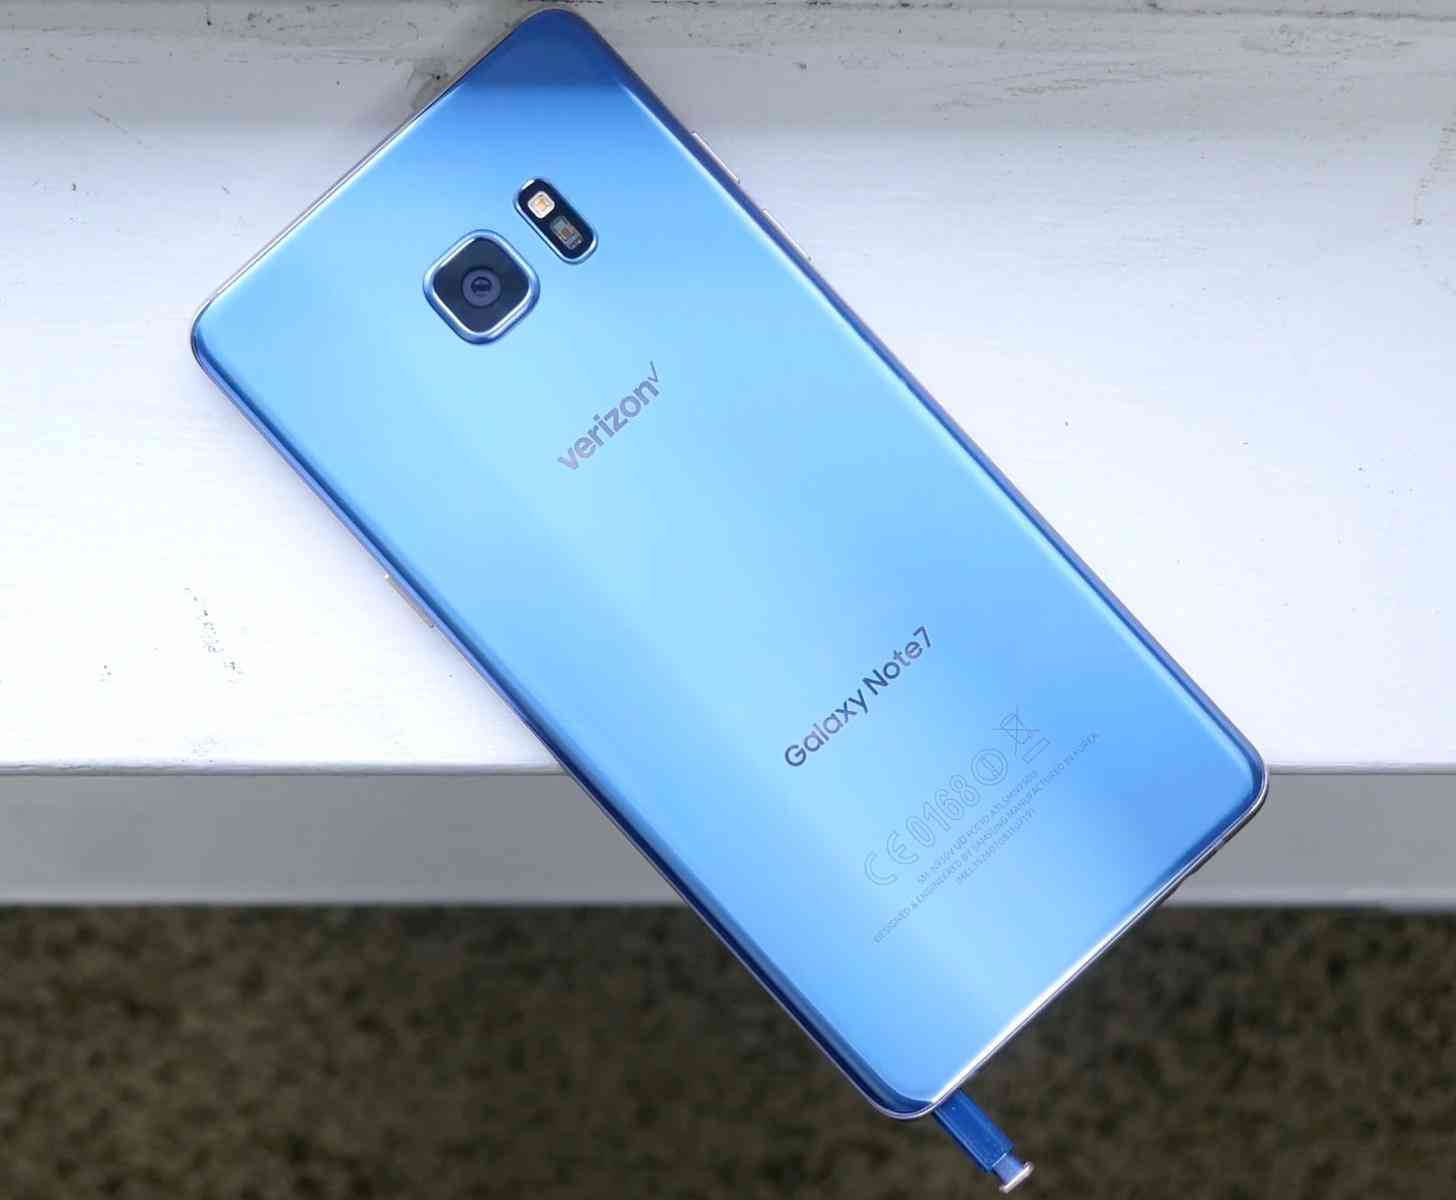 Verizon Galaxy Note 7 Coral Blue hands-on